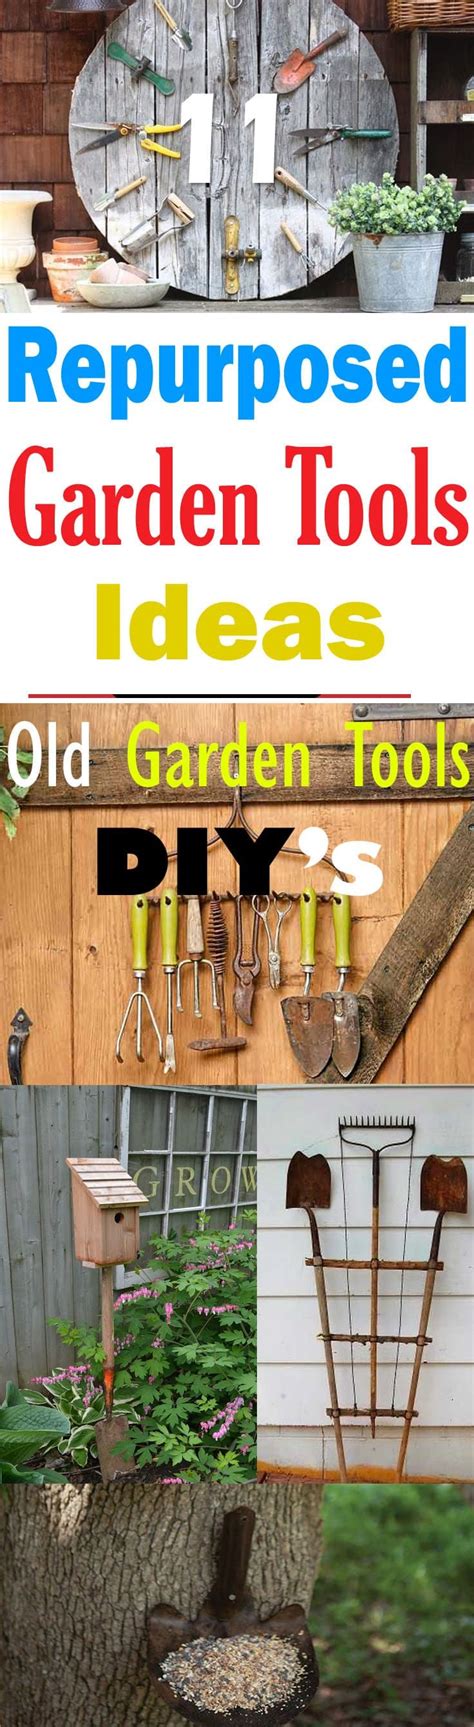 11 Repurposed Garden Tools Ideas Old Garden Tools Diy Crafts In 2020